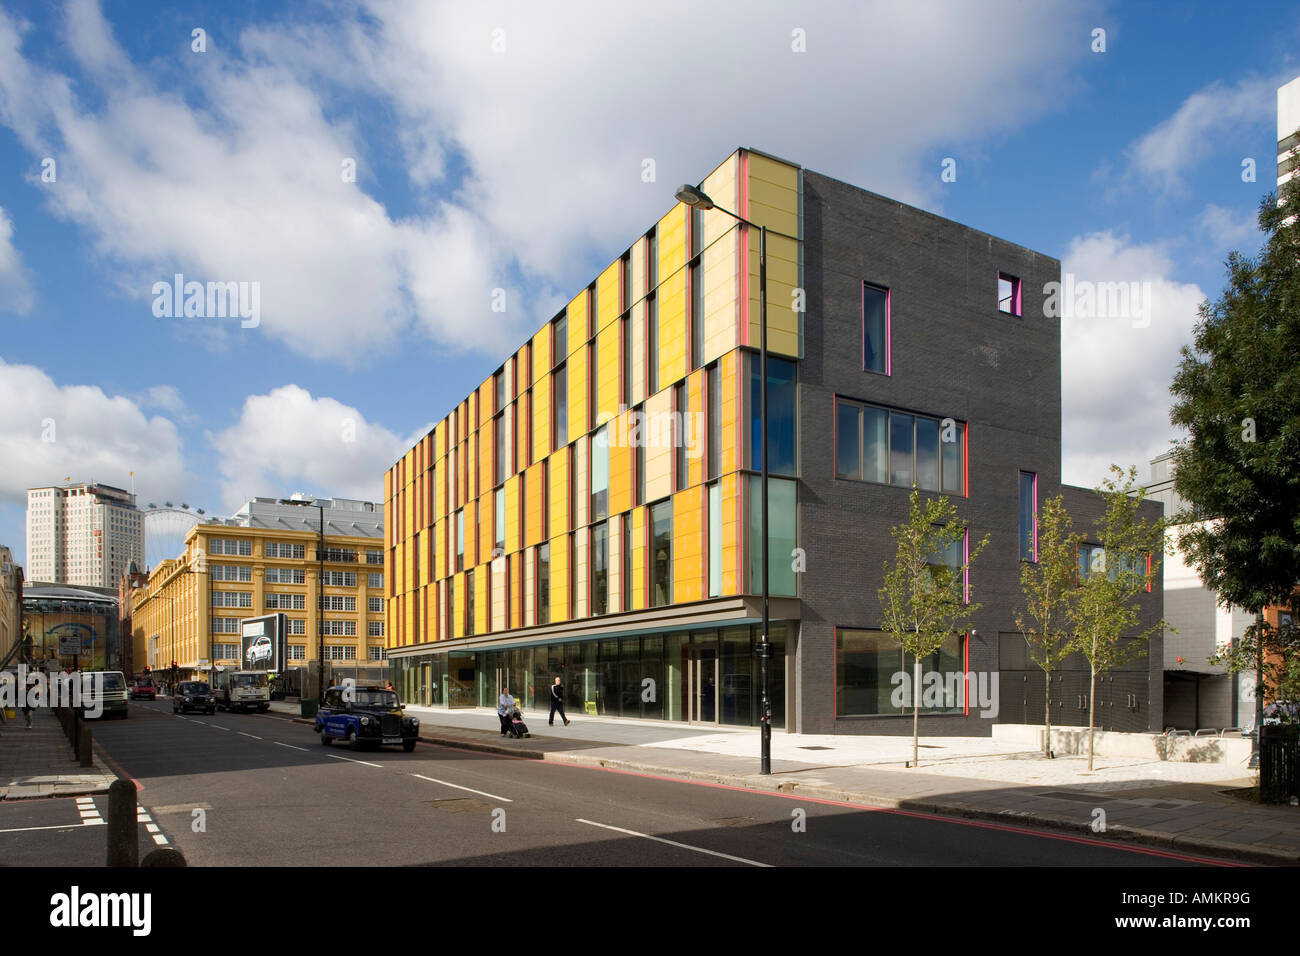 Coin Street Neighbourhood Centre, Stamford Street, London Architect: Haworth Tompkins Architects Stock Photo